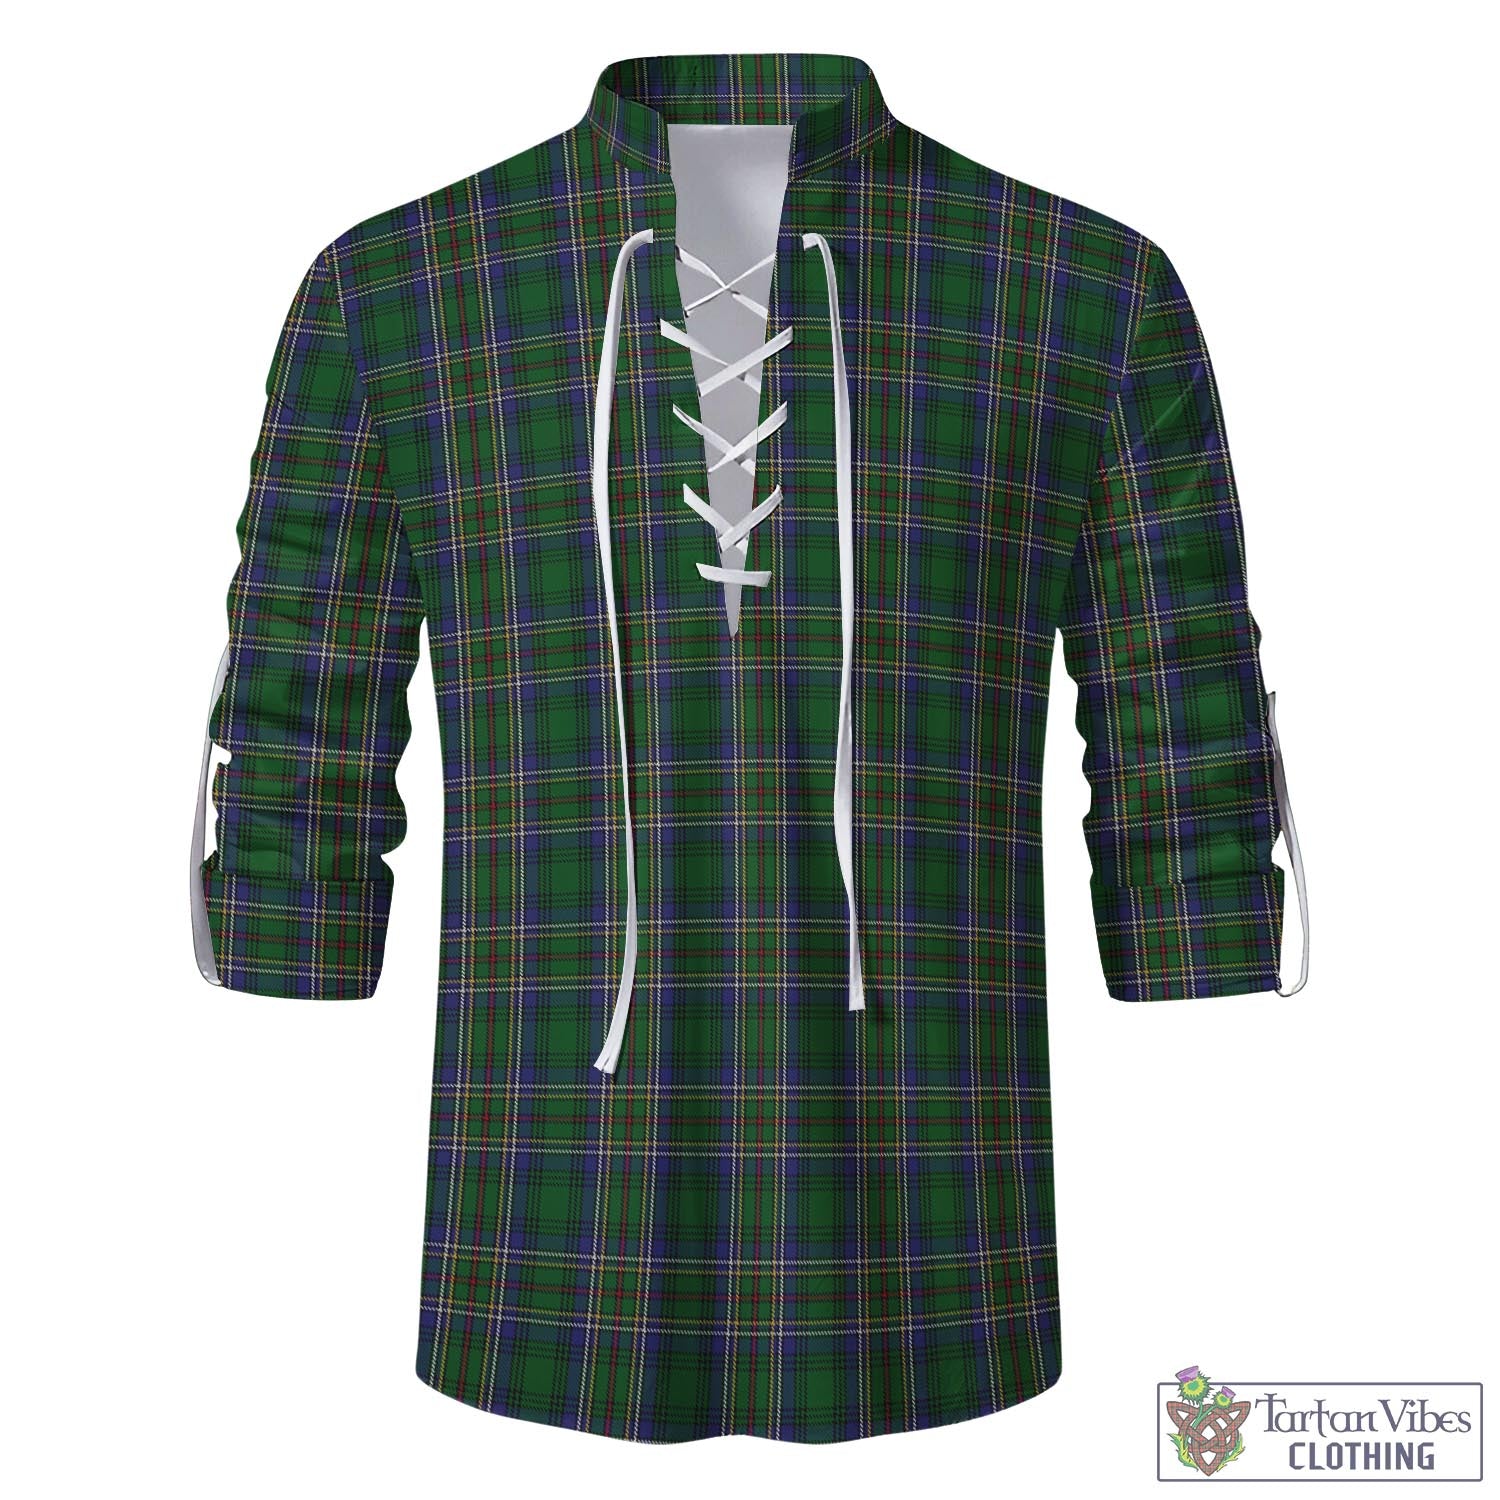 Tartan Vibes Clothing Cockburn Tartan Men's Scottish Traditional Jacobite Ghillie Kilt Shirt